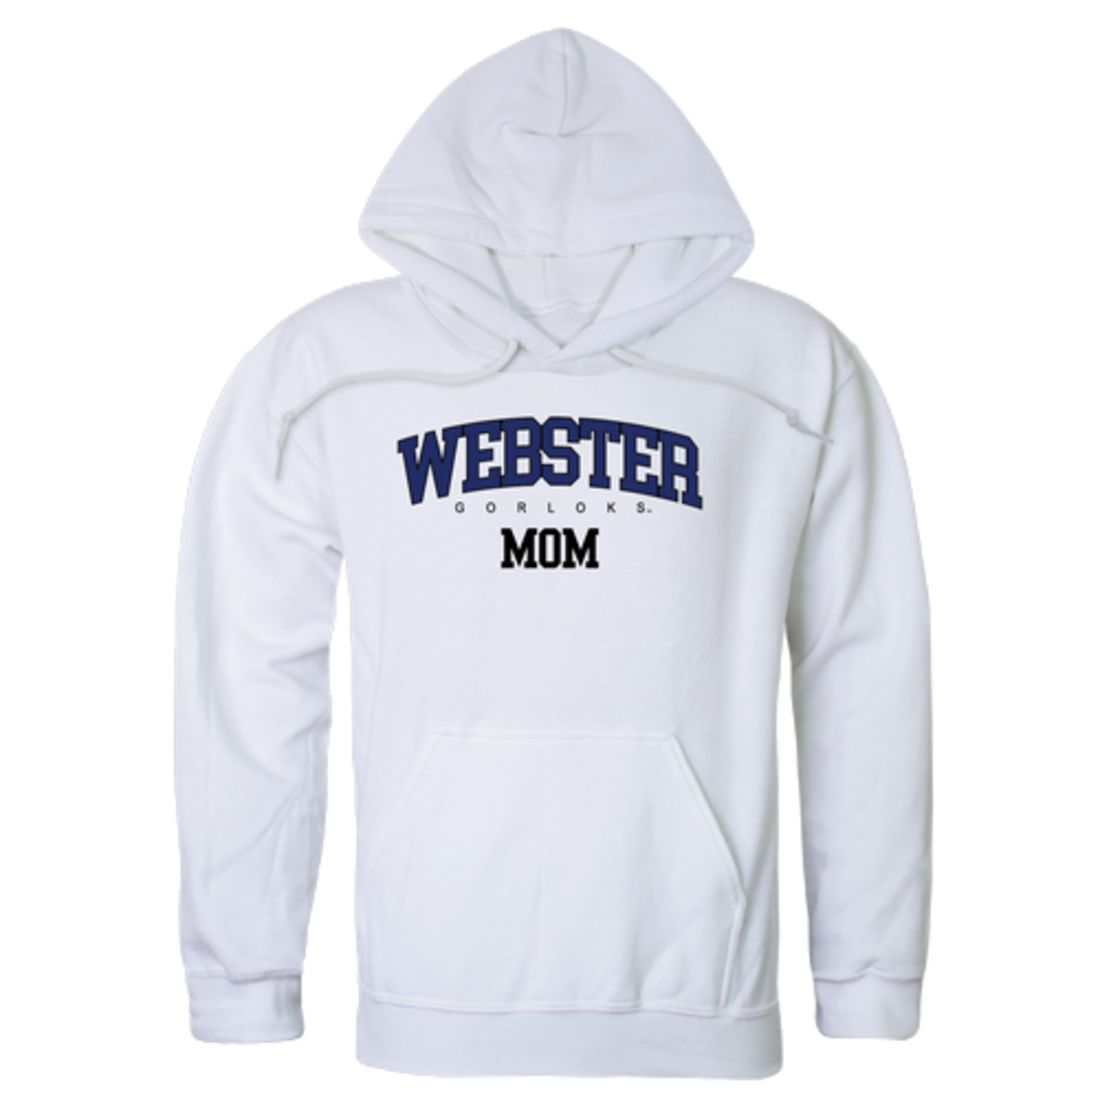 Webster University Gorlocks Mom Fleece Hoodie Sweatshirts